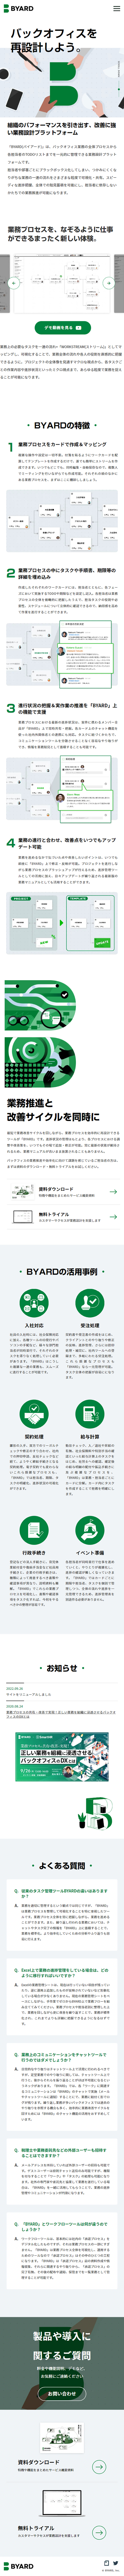 BYARD_sp_1